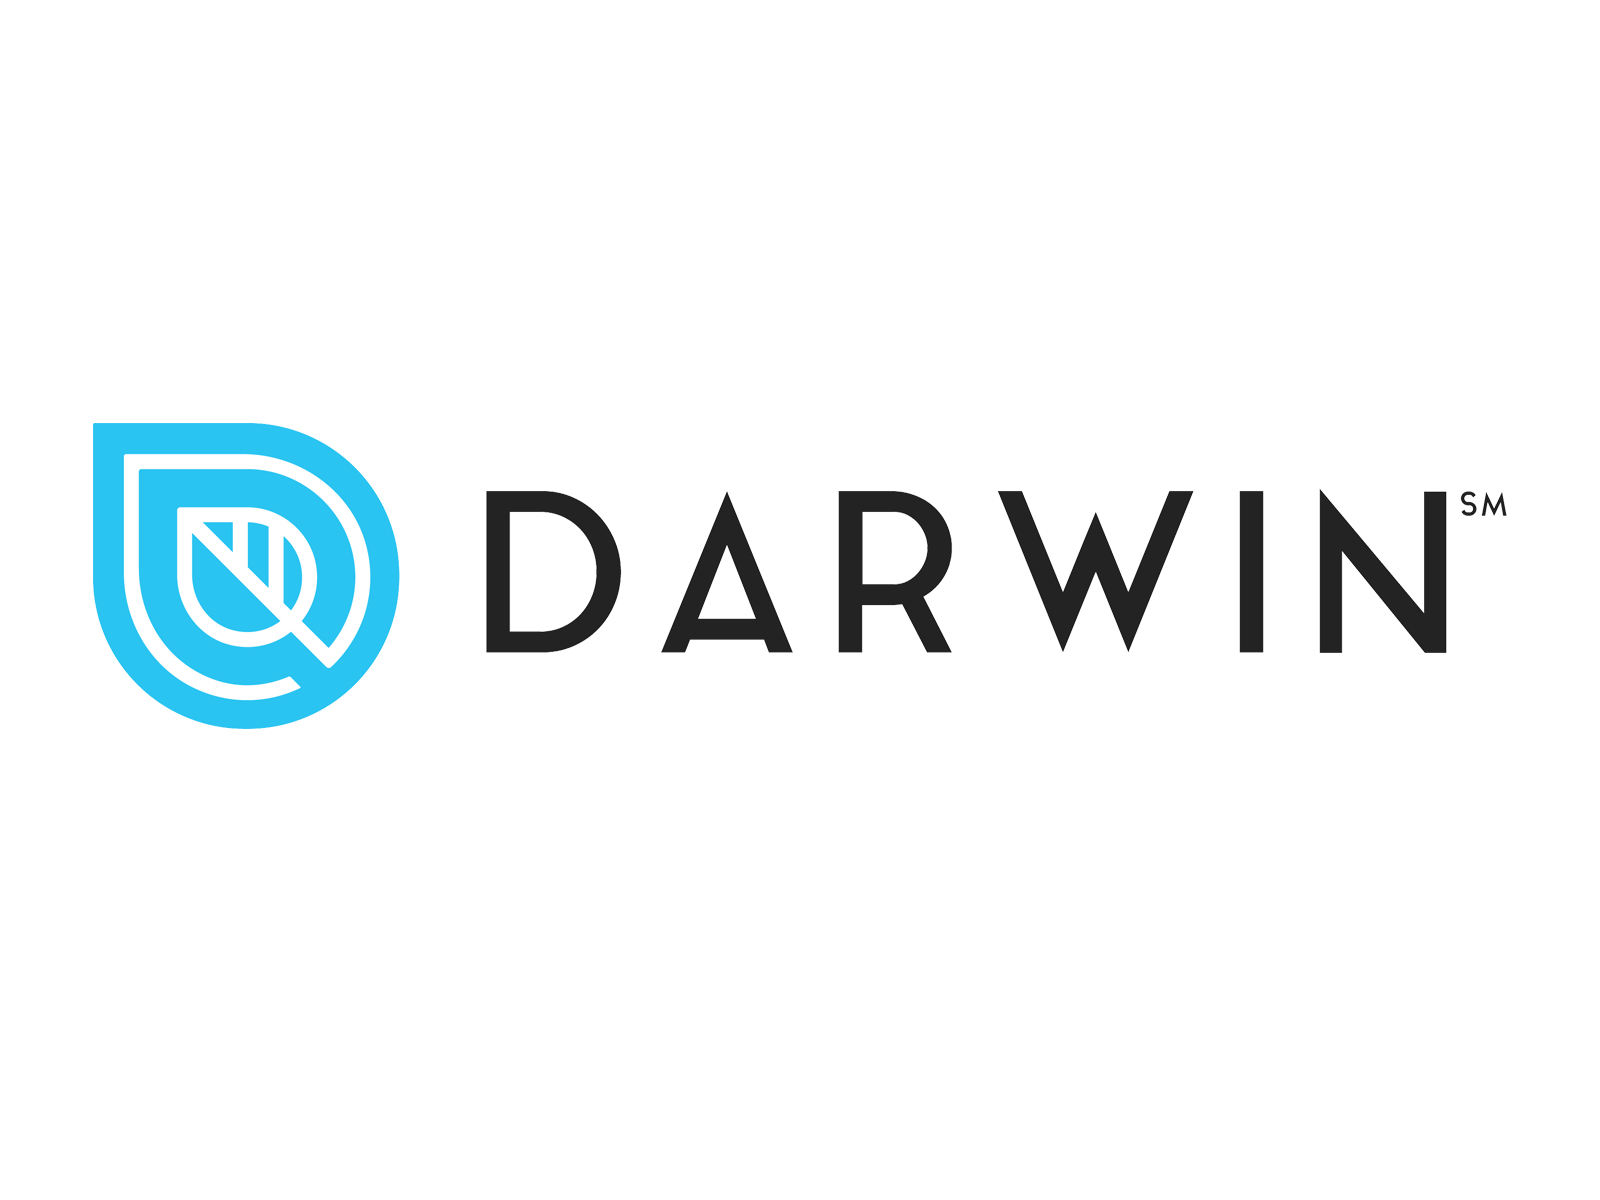 Charles Darwin Foundation partnership model | CASIO